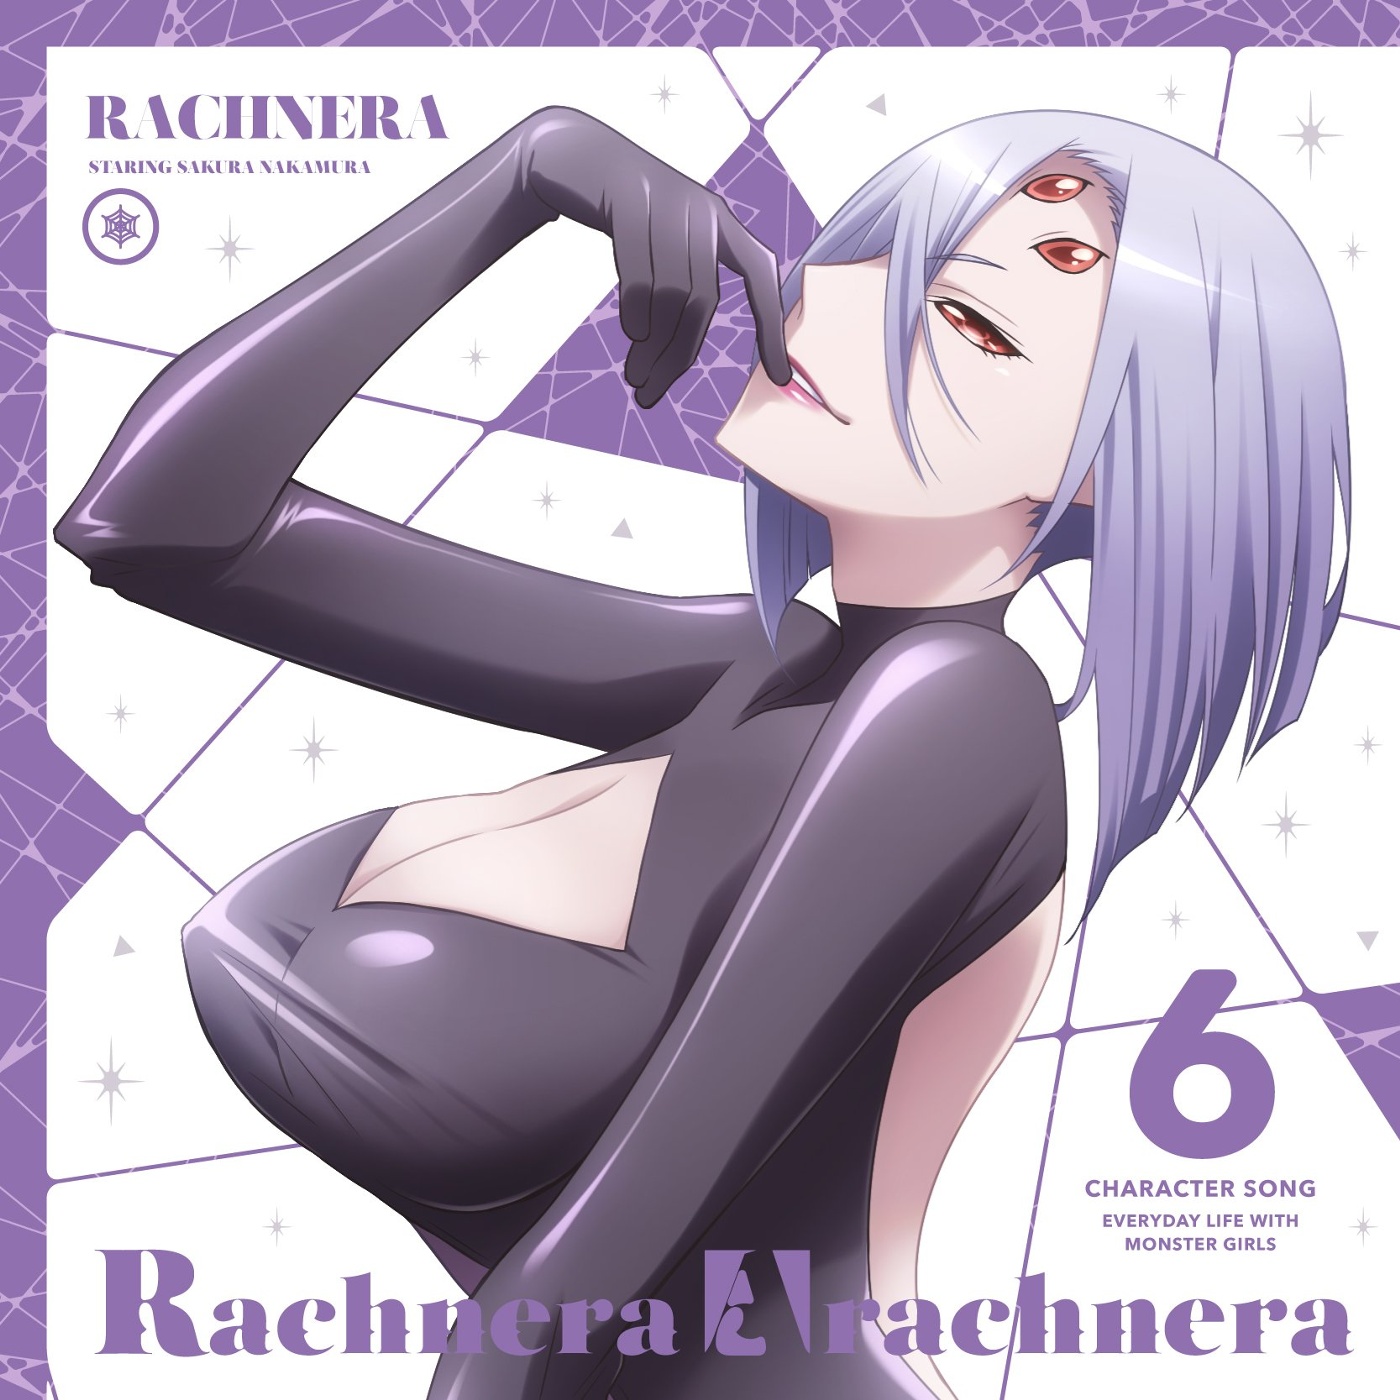 Character: Rachnera Arachnera (6)